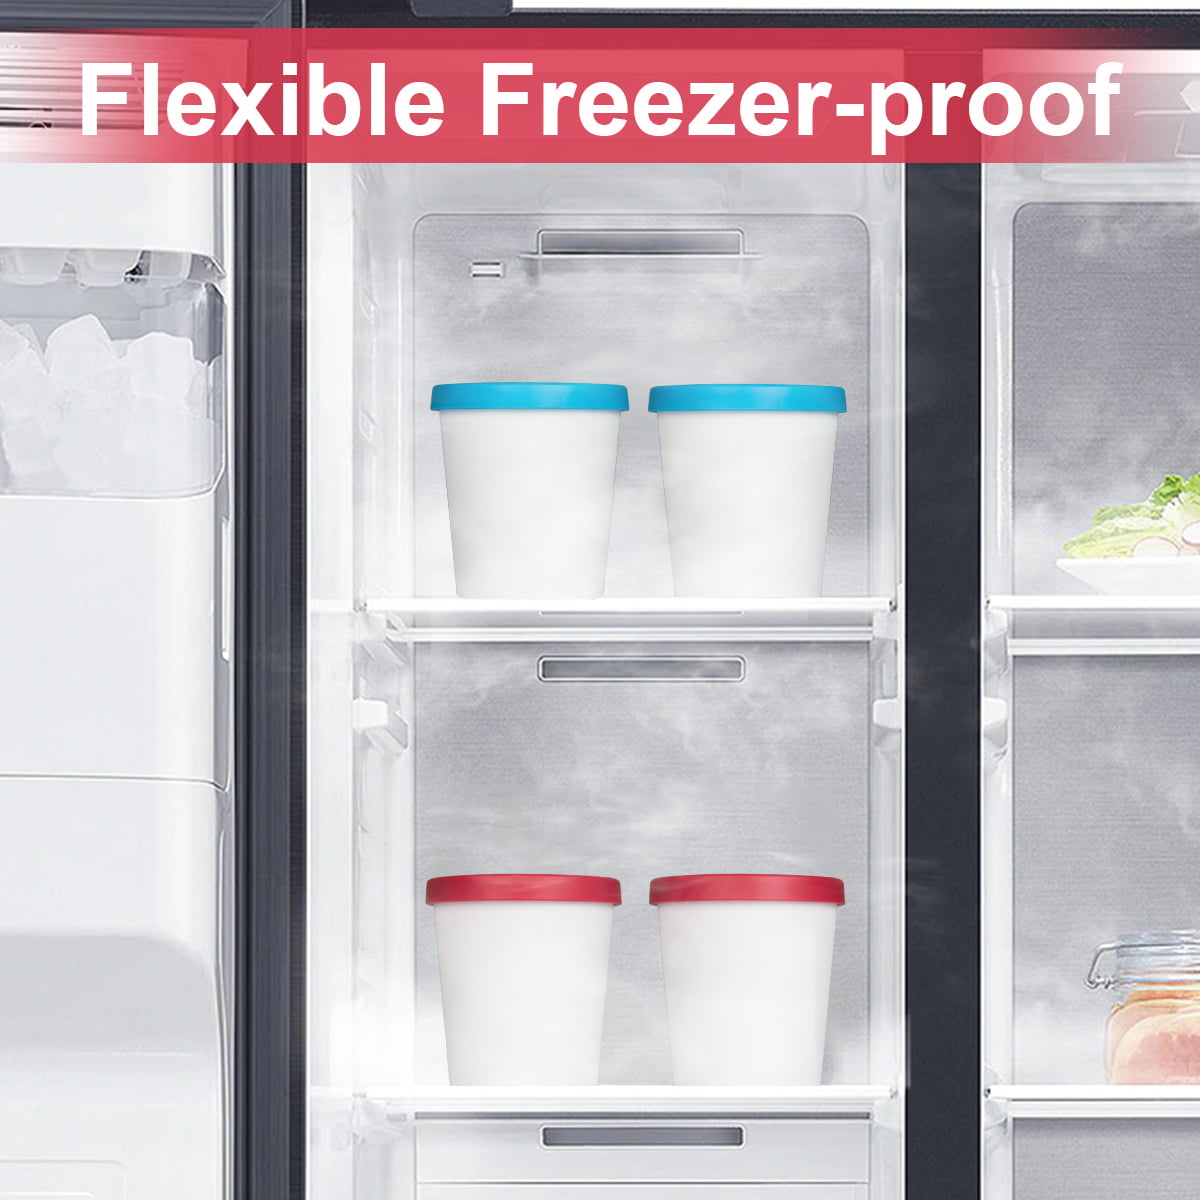 Ice Cream Containers - 2 Quart Ea. (Set of 2) - Premium Reusable Freezer  Storage for Homemade Ice Cream Tub for Sorbet, Frozen Yogurt - Flexible